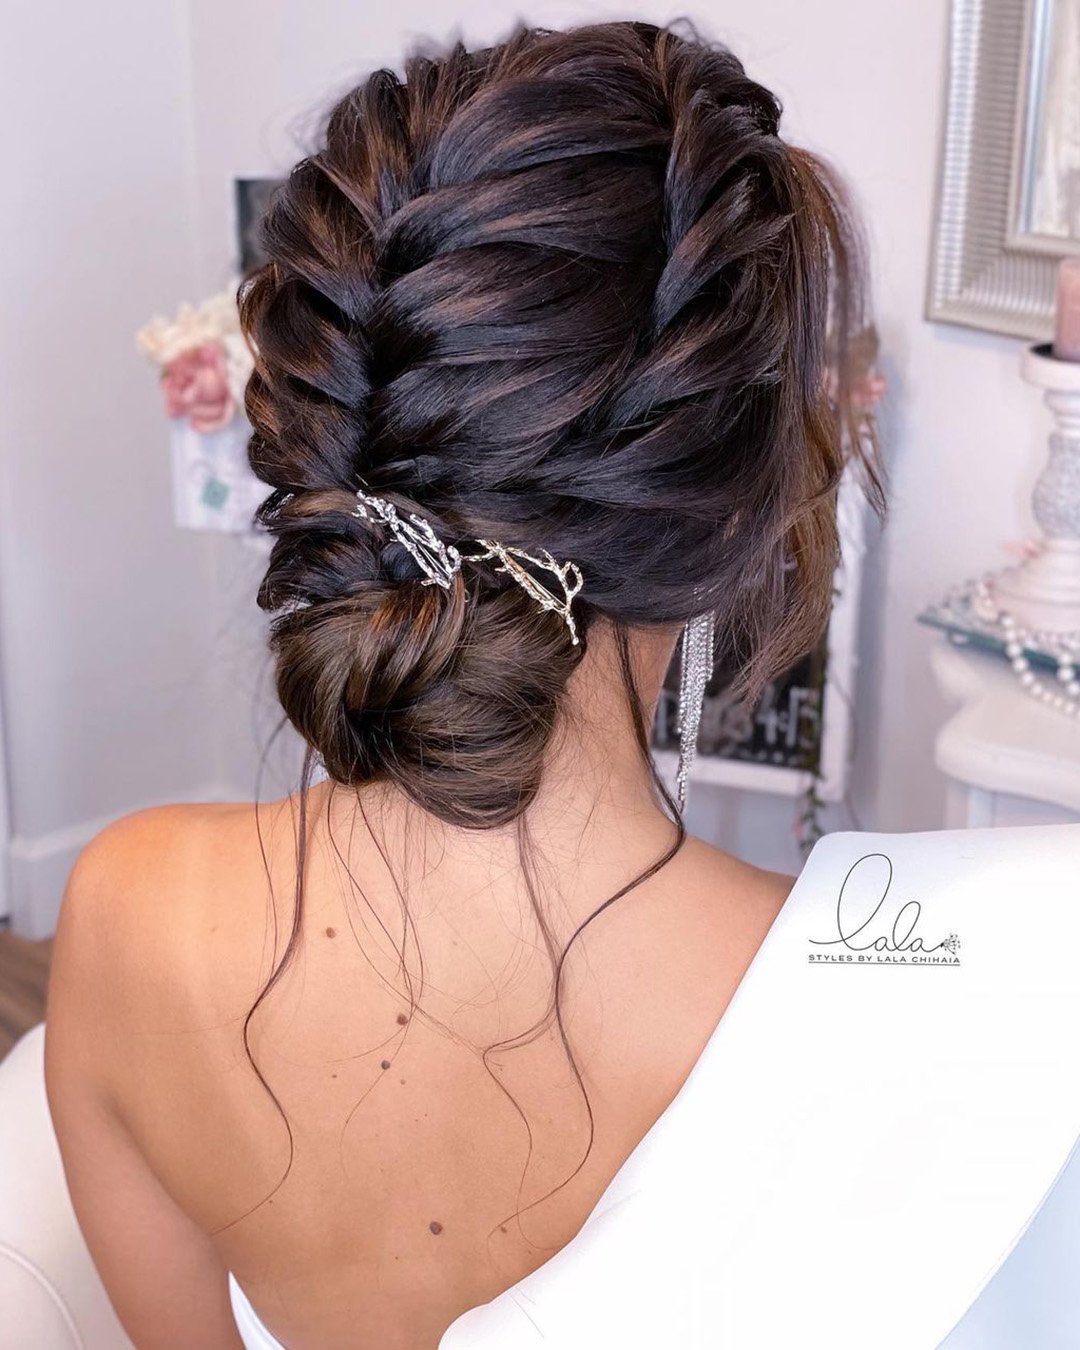 wedding updos with braids low bun with texture on brown hair lalasupdos